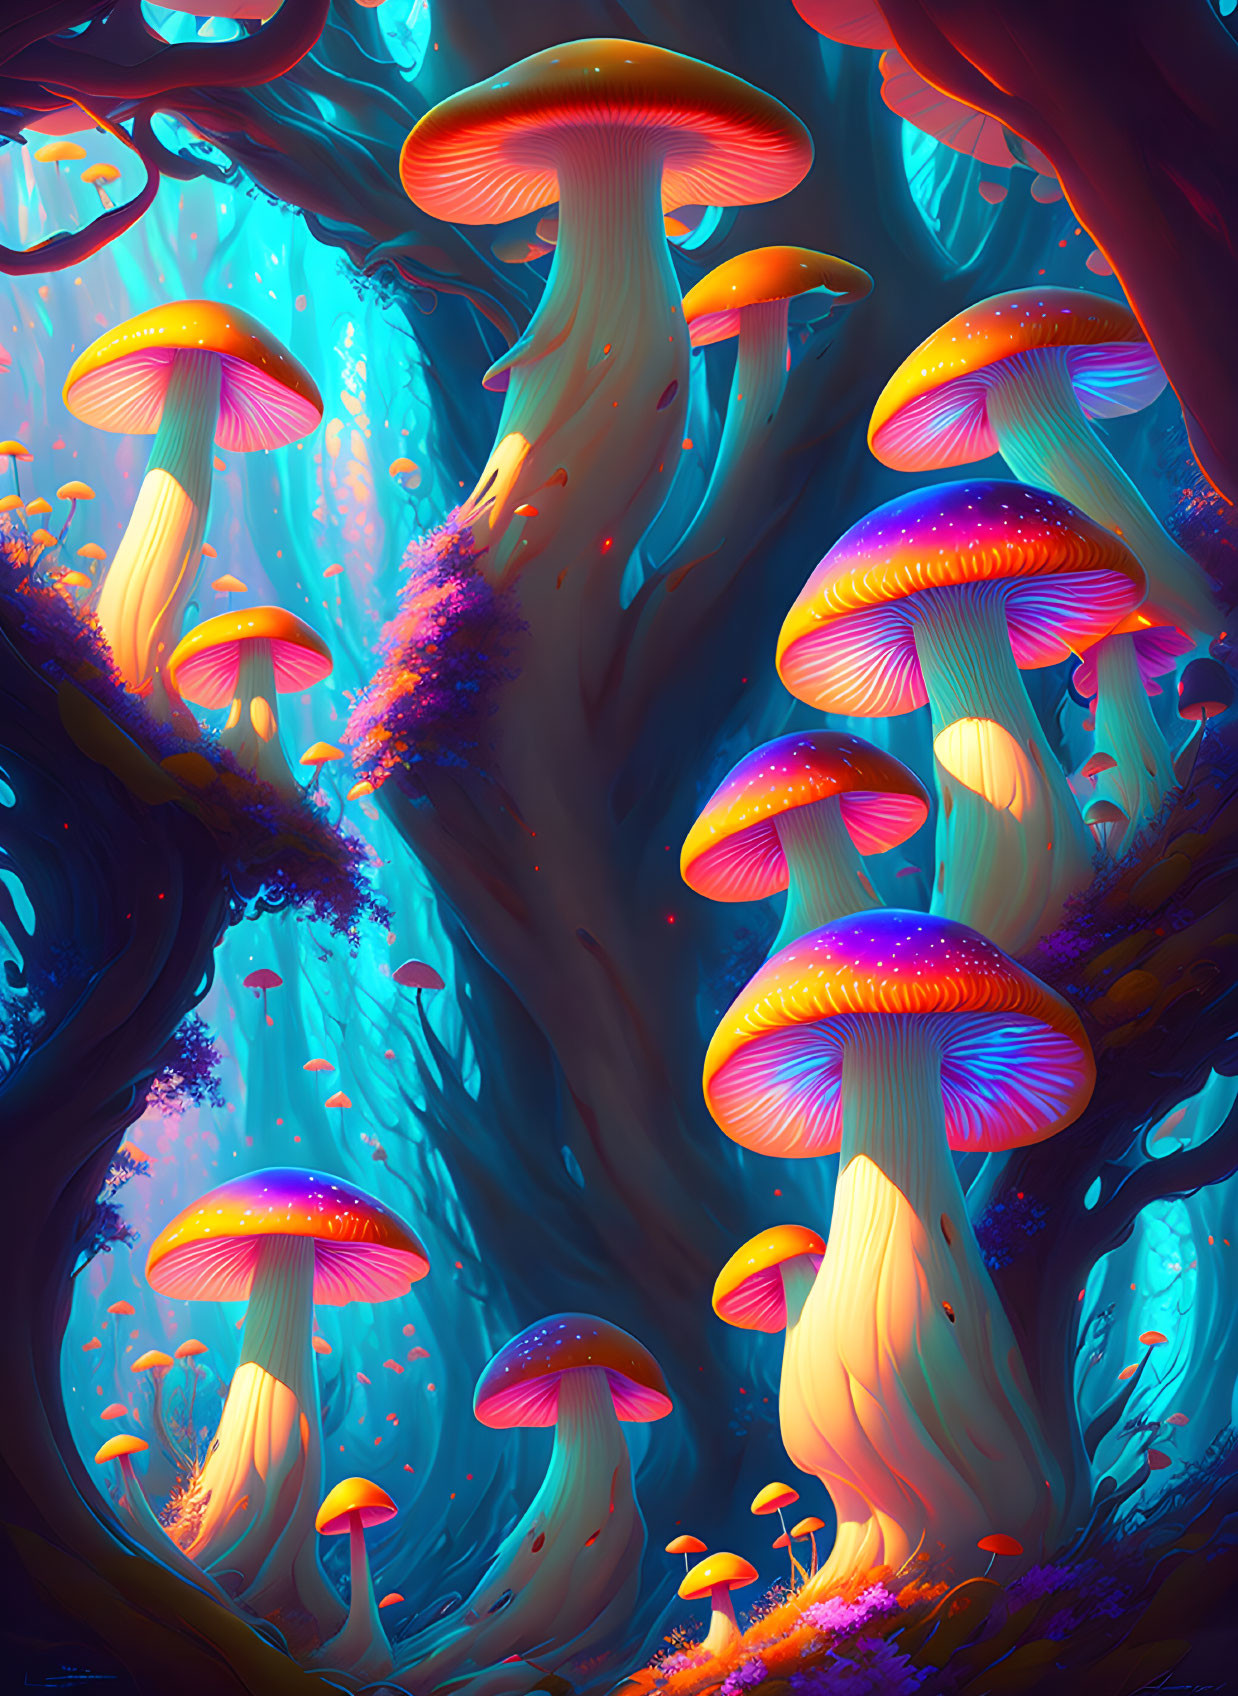 Enchanted forest digital art with oversized luminous mushrooms